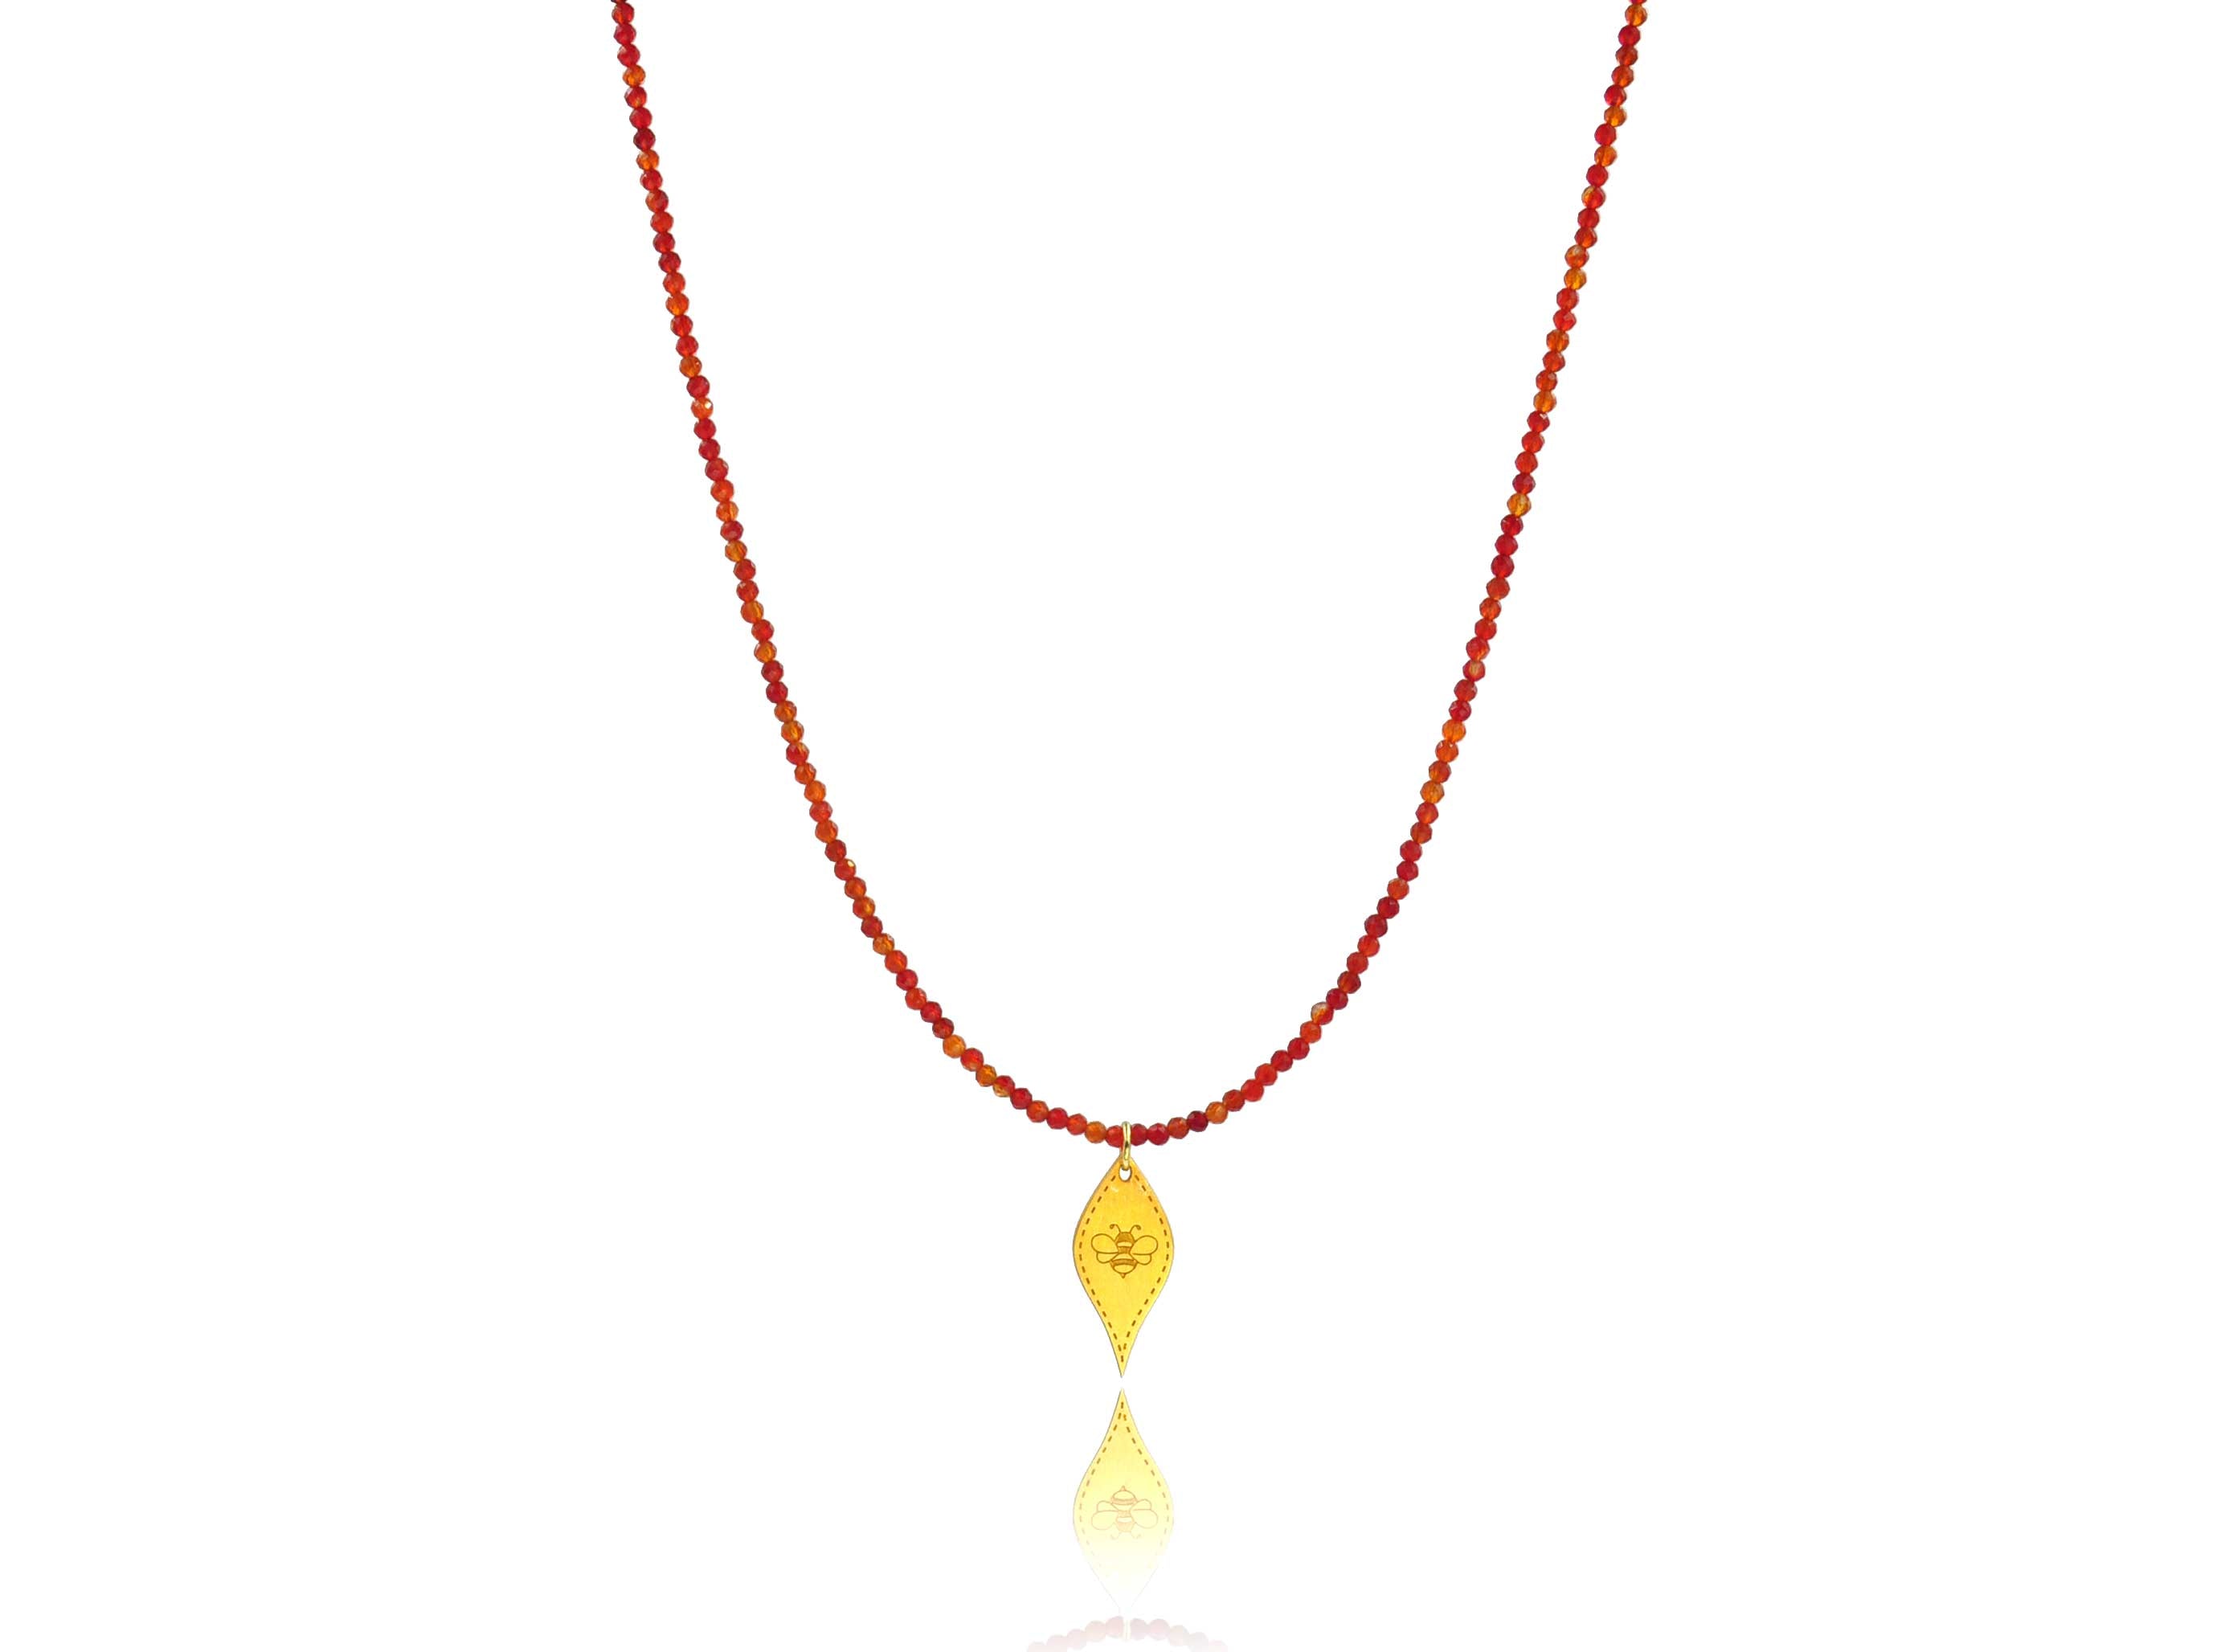 Corneol 'Bee' Necklace